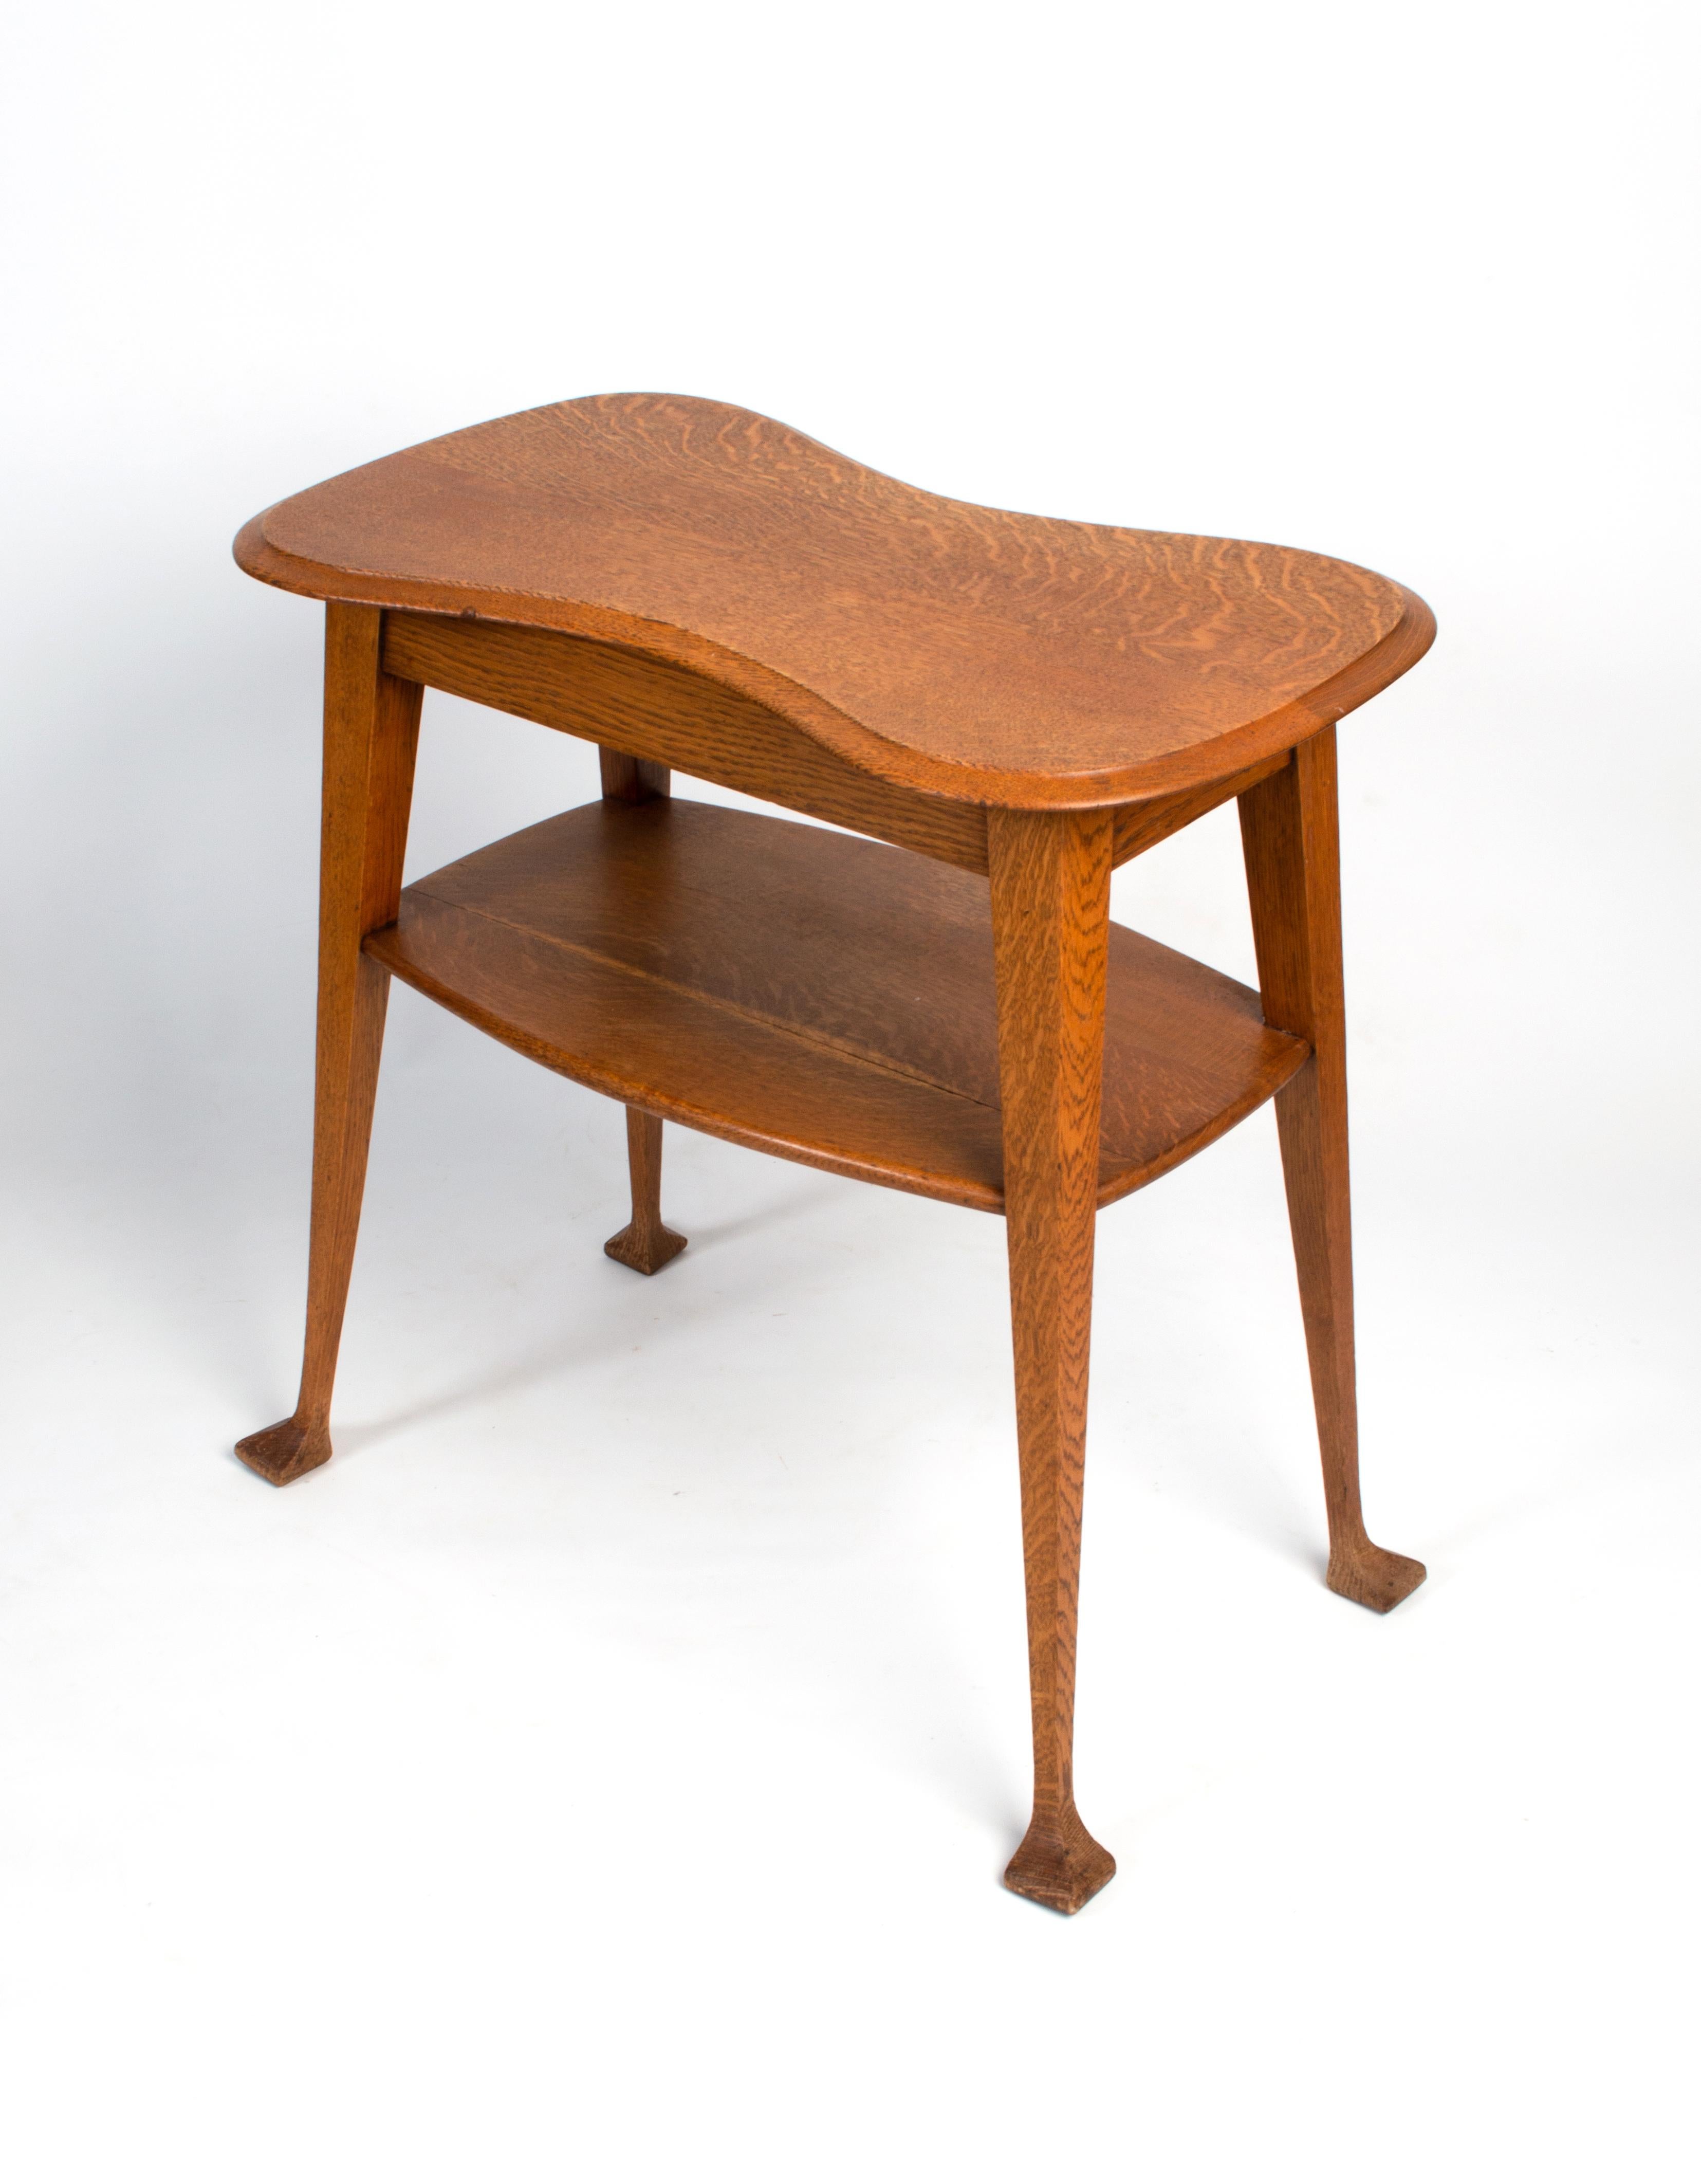 Antique English Shapland & Petter Arts & Crafts Golden Oak Side Table C.1890 For Sale 5